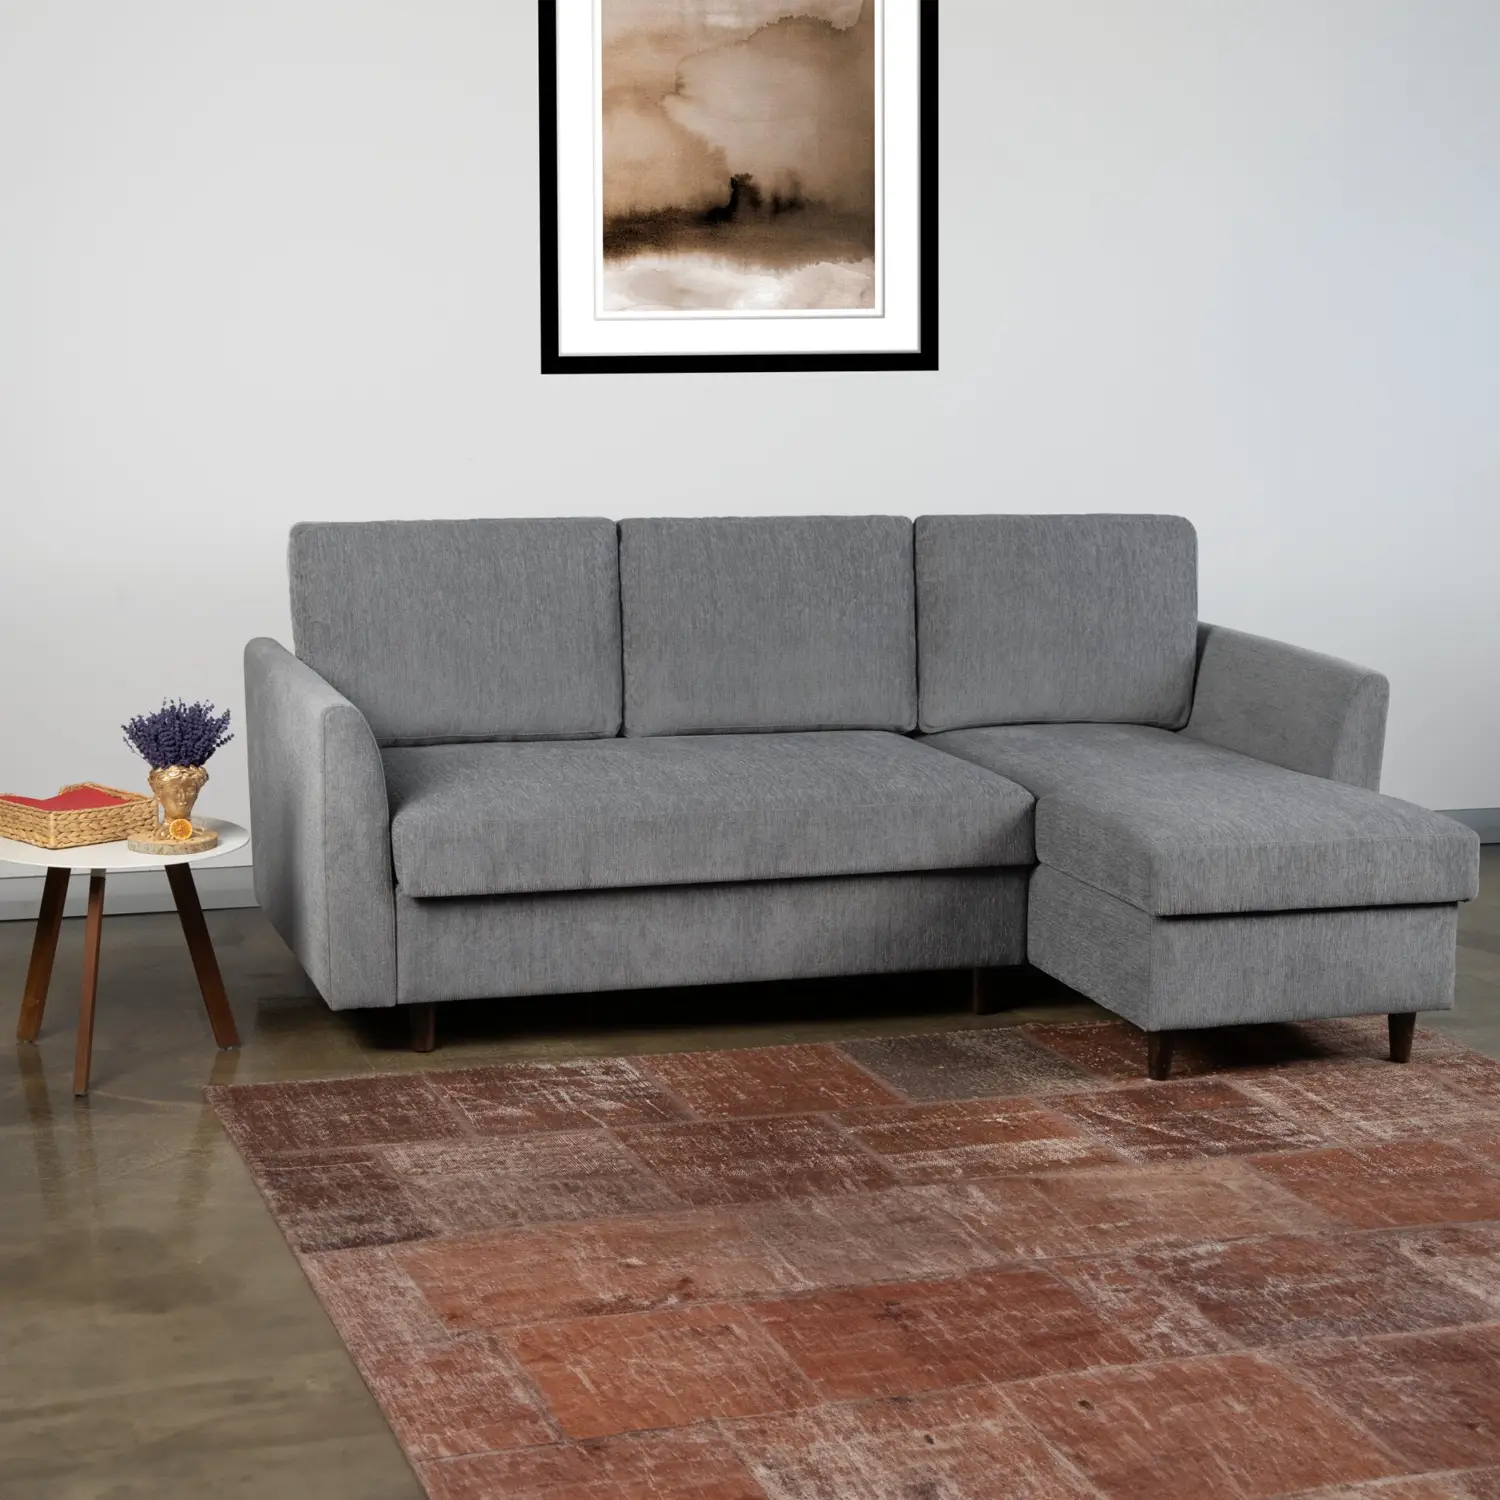 Metis Grey Textured Weave Fabric Upholstered Corner Sofa Bed